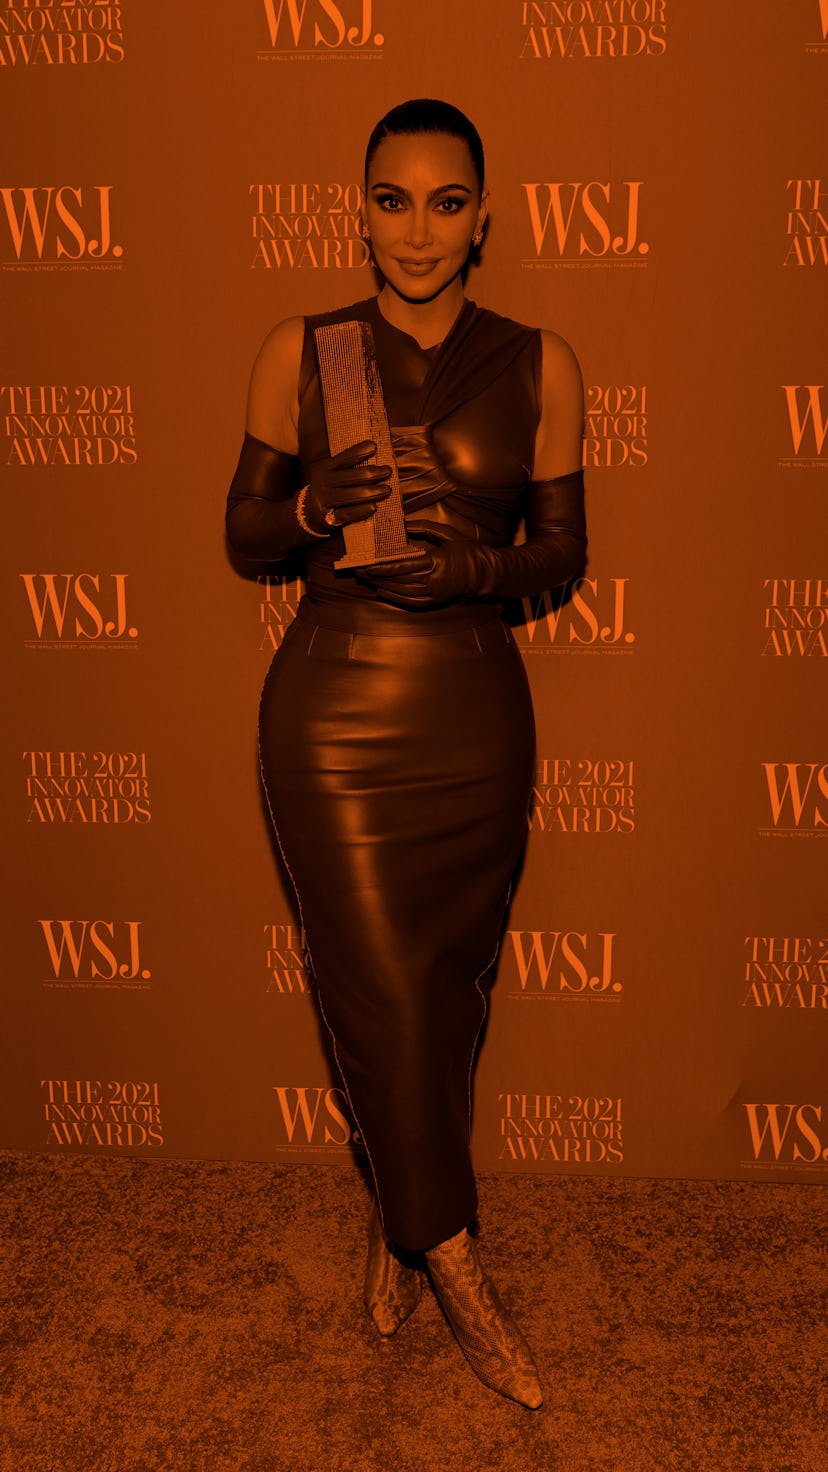 NEW YORK, NEW YORK - NOVEMBER 01: Kim Kardashian West poses with an award during the WSJ. Magazine 2...